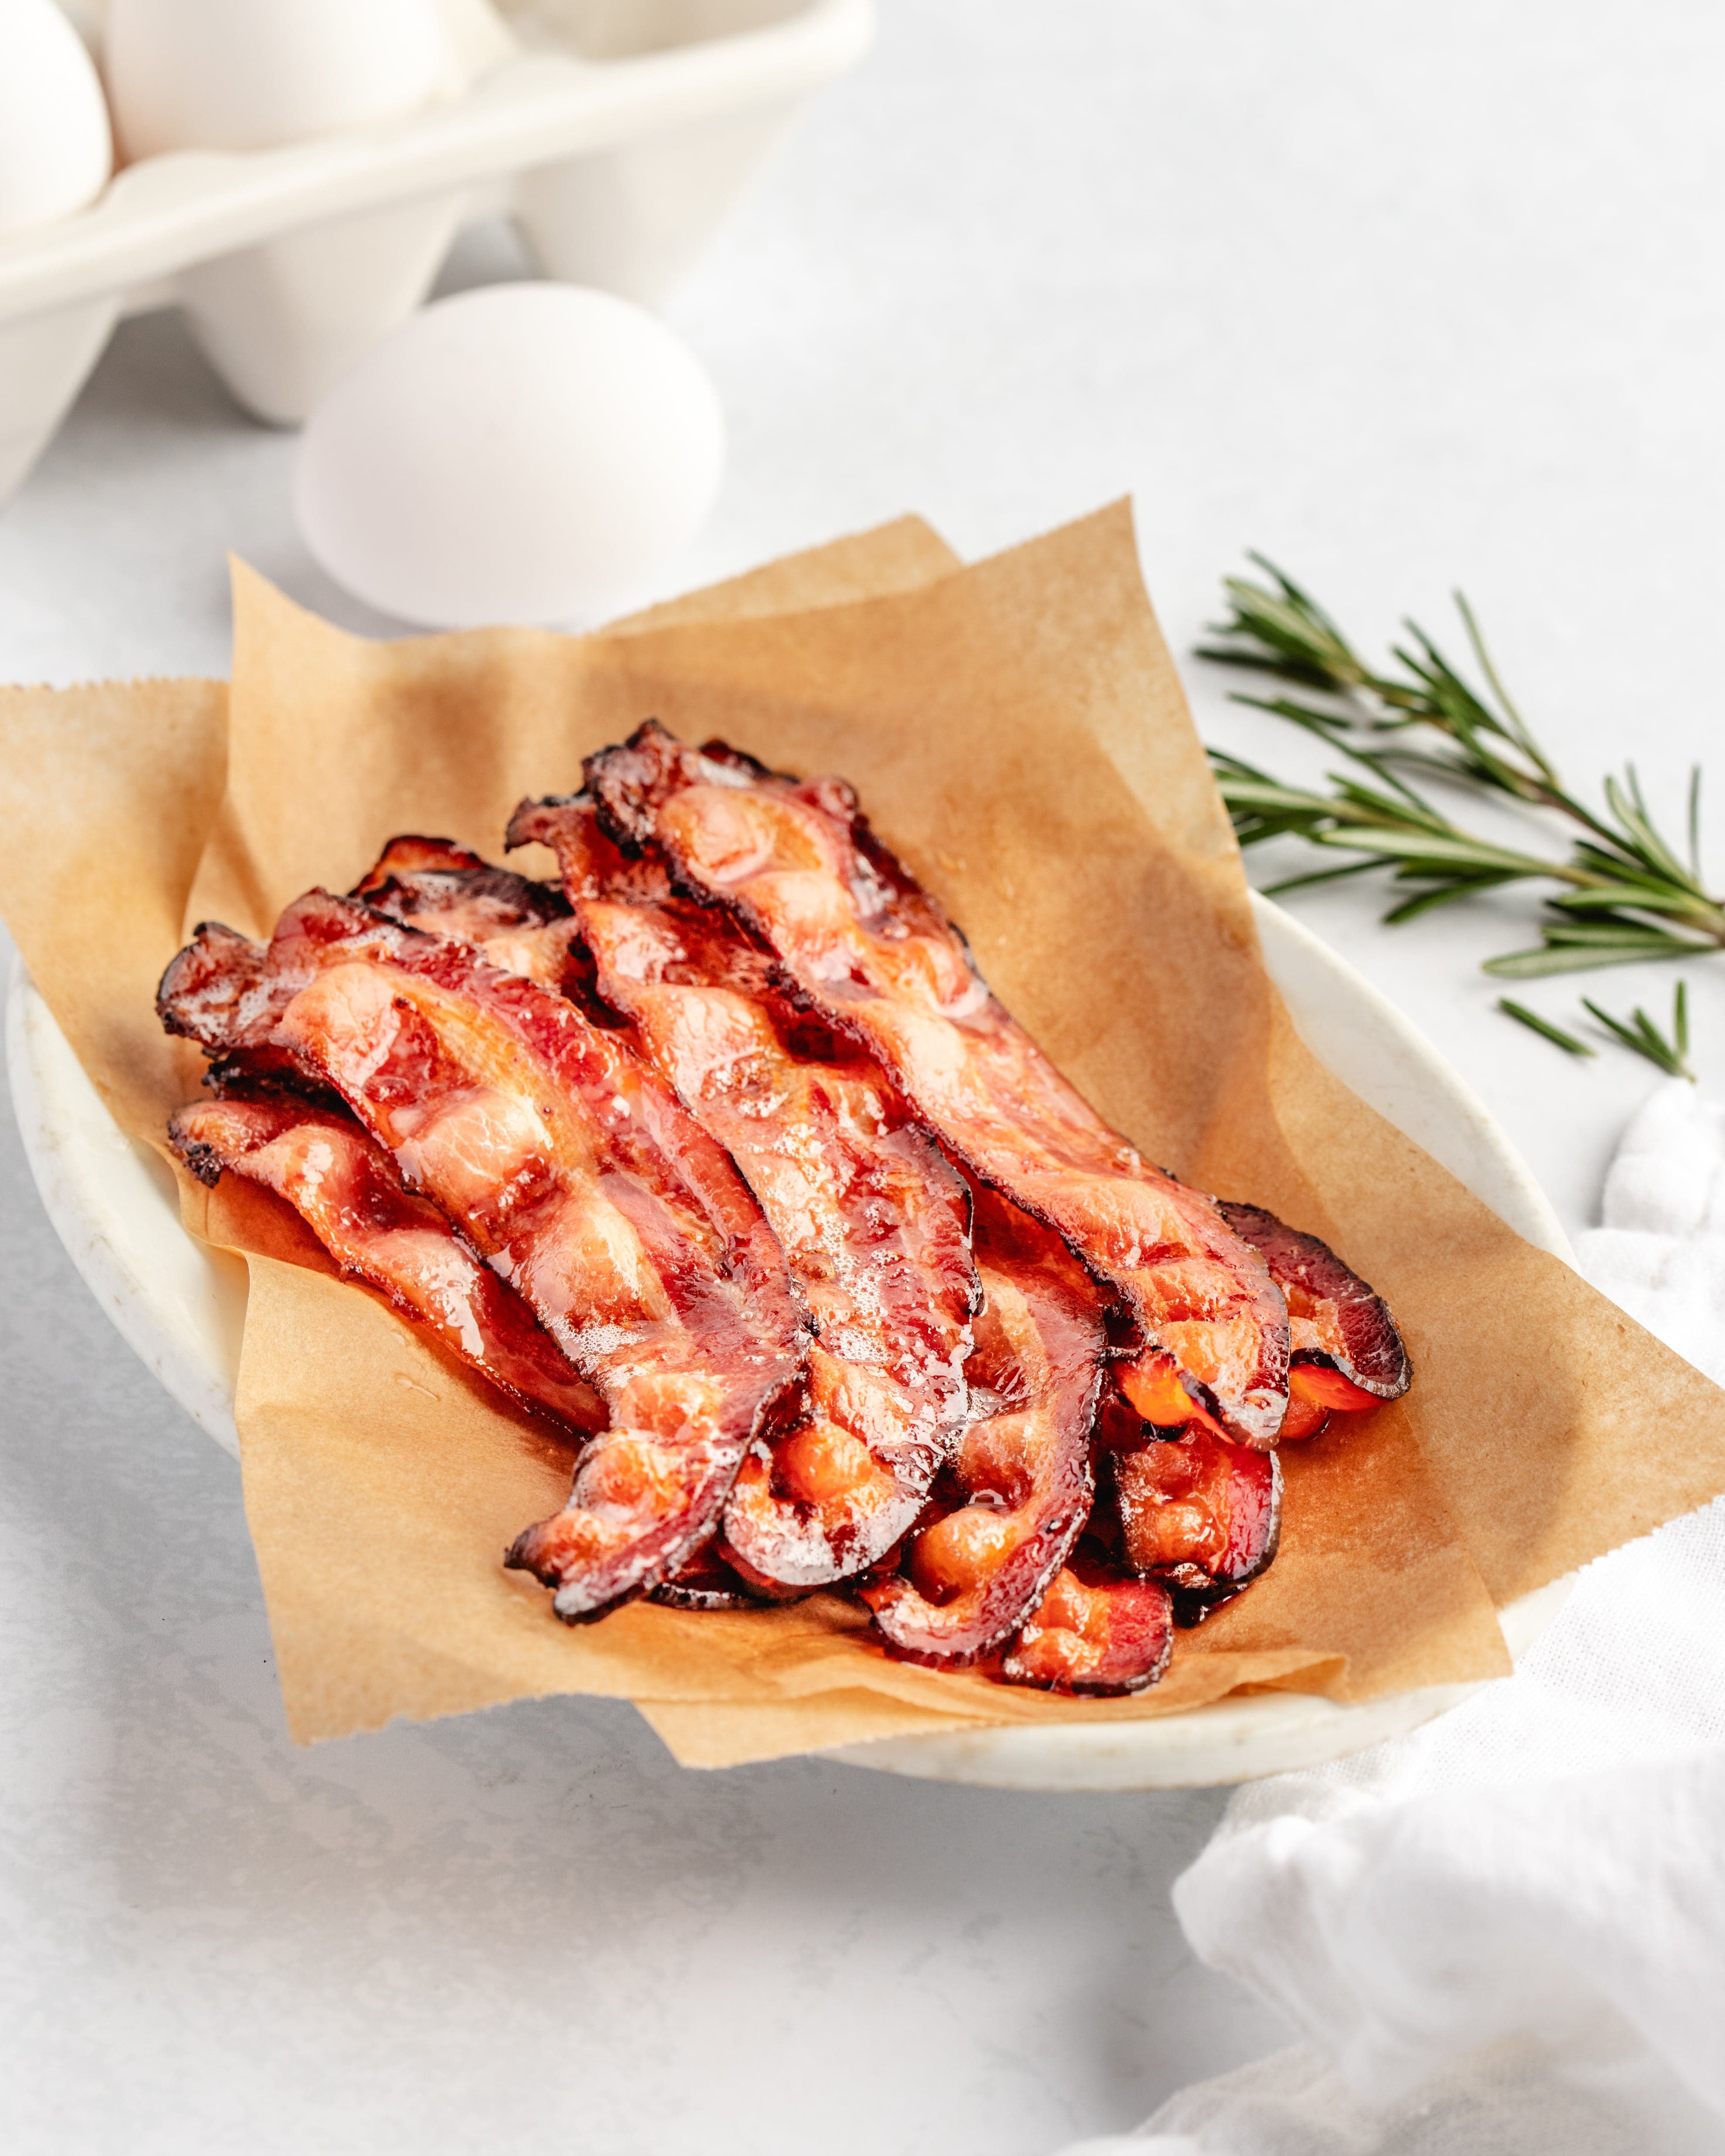 fried bacon arrayed on a plate